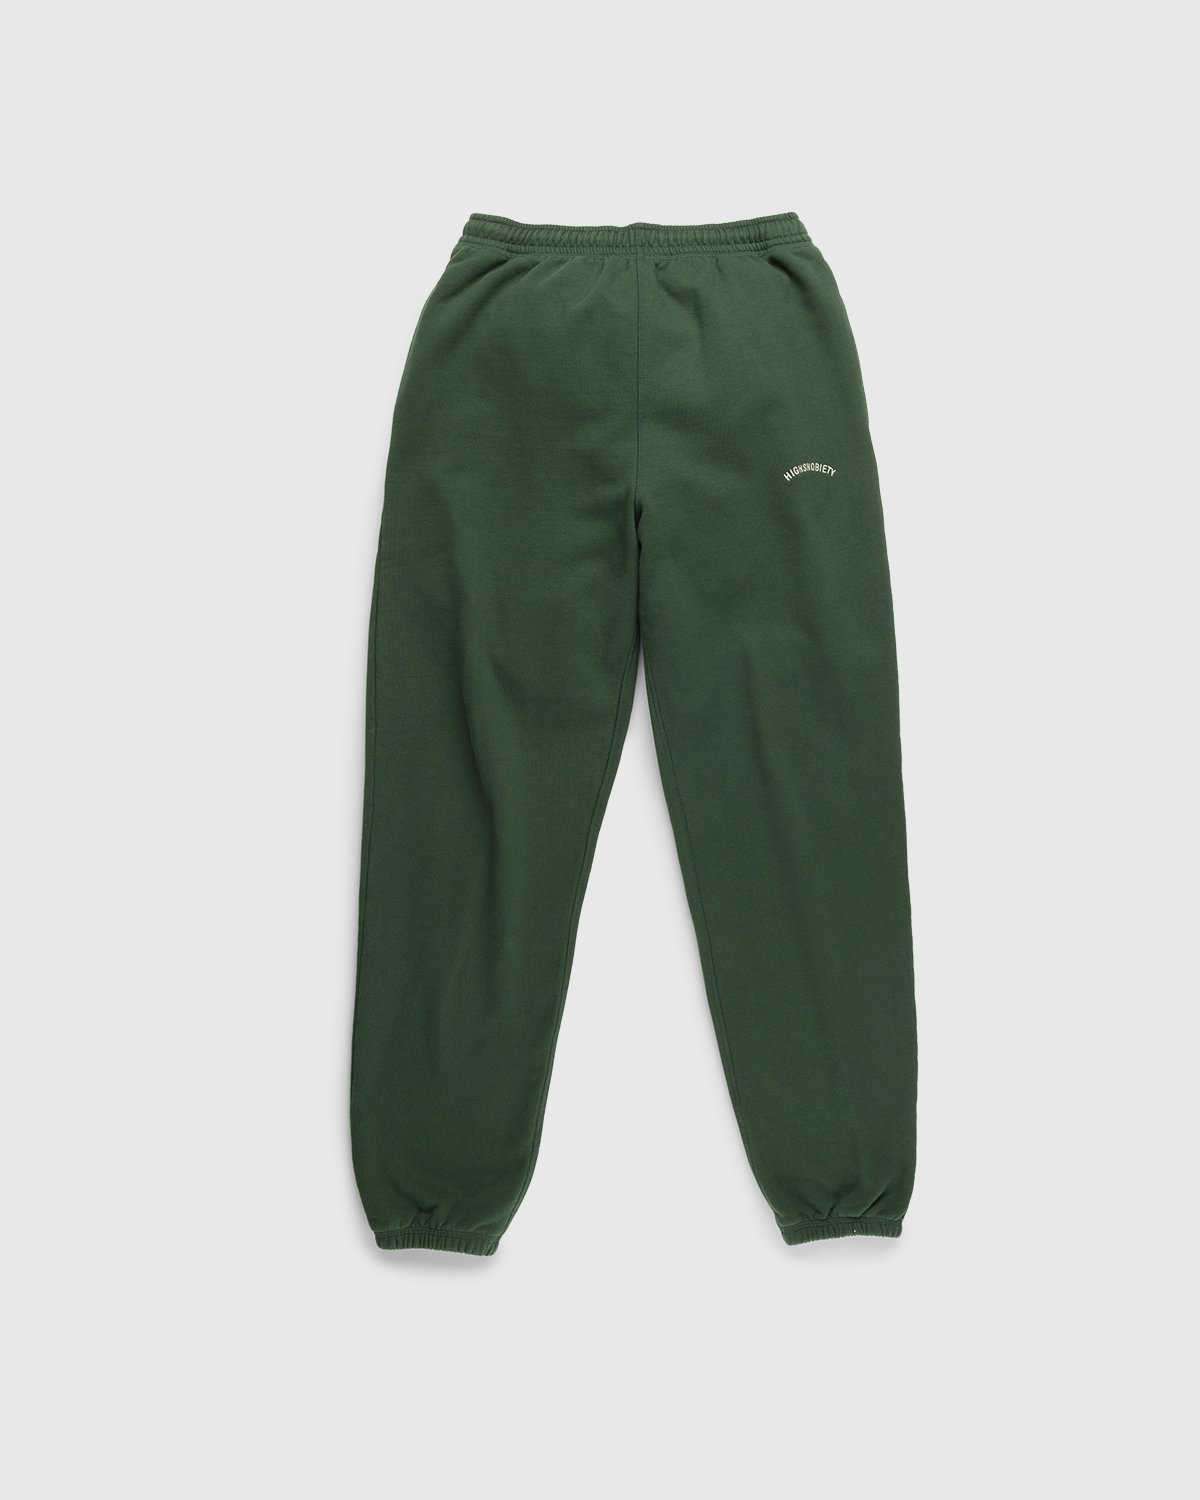 Highsnobiety - Logo Fleece Staples Pants Campus Green - Clothing - Green - Image 1